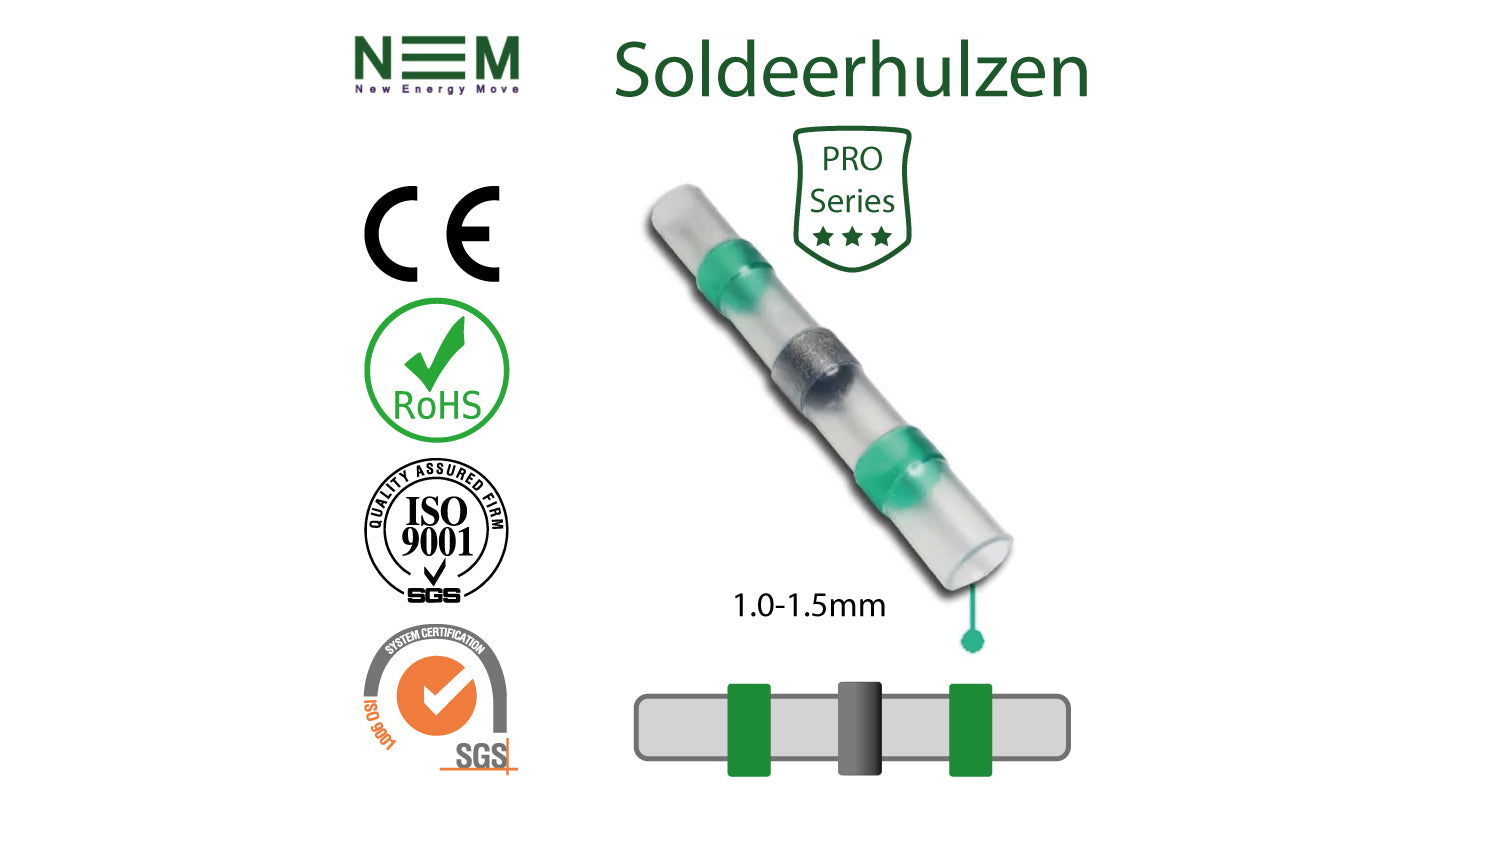 Soldeerhuls PRO Series Groen 1.0-1.5mm - per stuk - N.E.M.